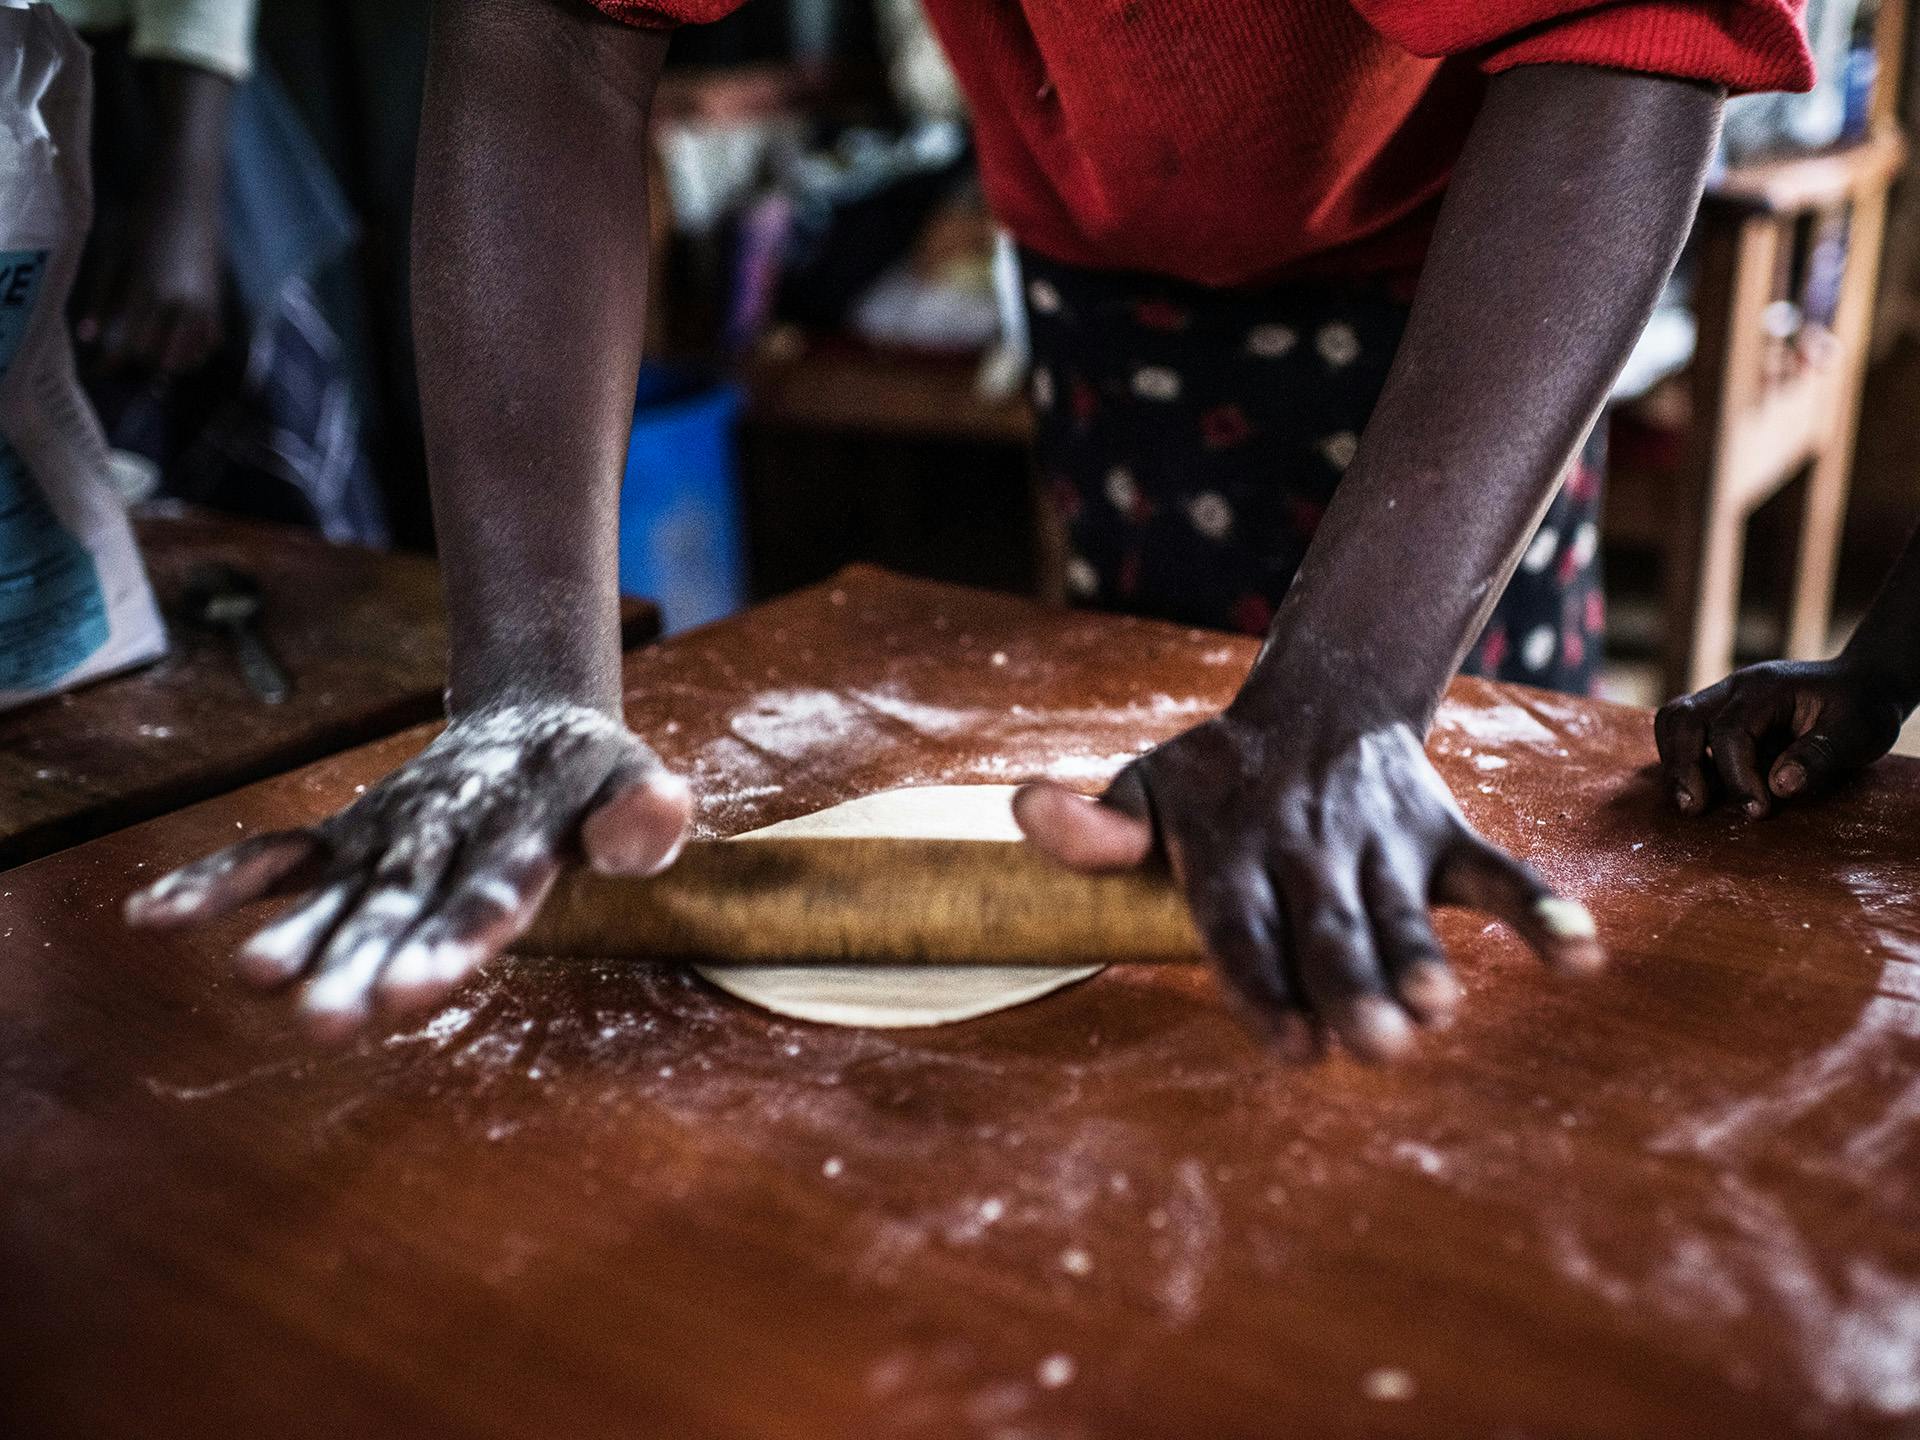 Two hands baking a dough